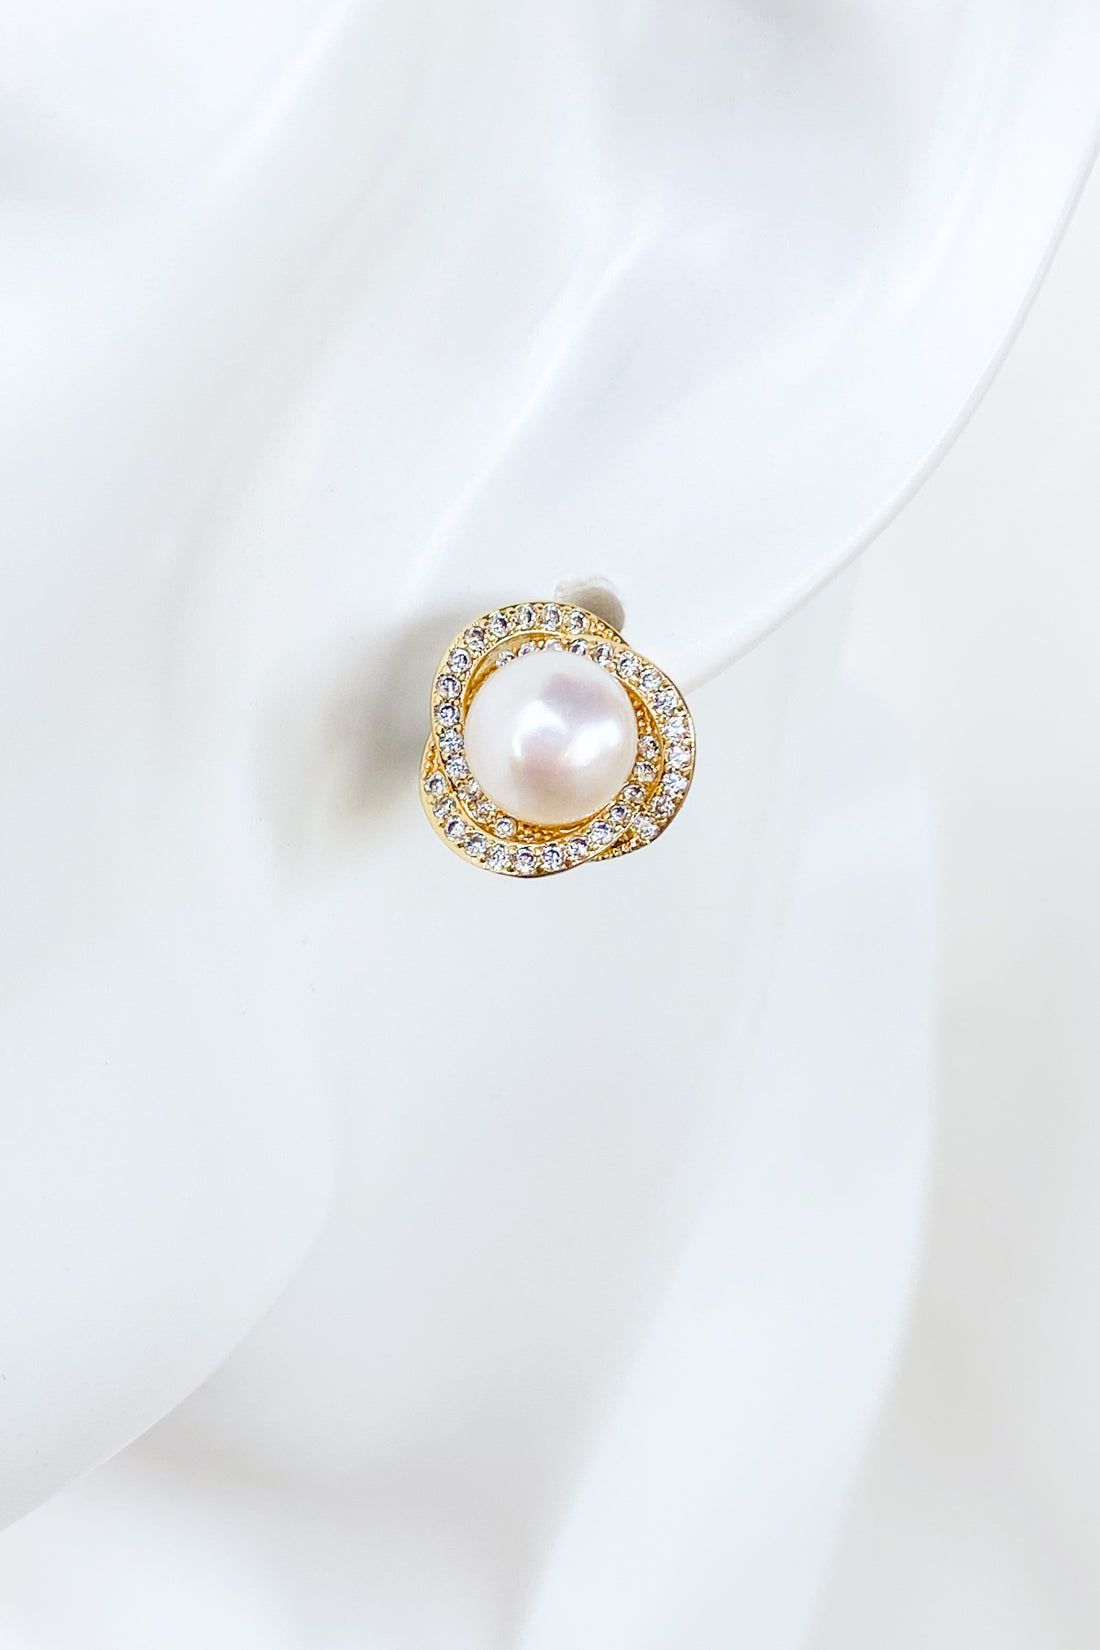 SKYE San Francisco Shop SF Chic Modern Elegant Classy Women Jewelry French Parisian Minimalist Emilien 18K Gold Crystal Pearl Earrings 2